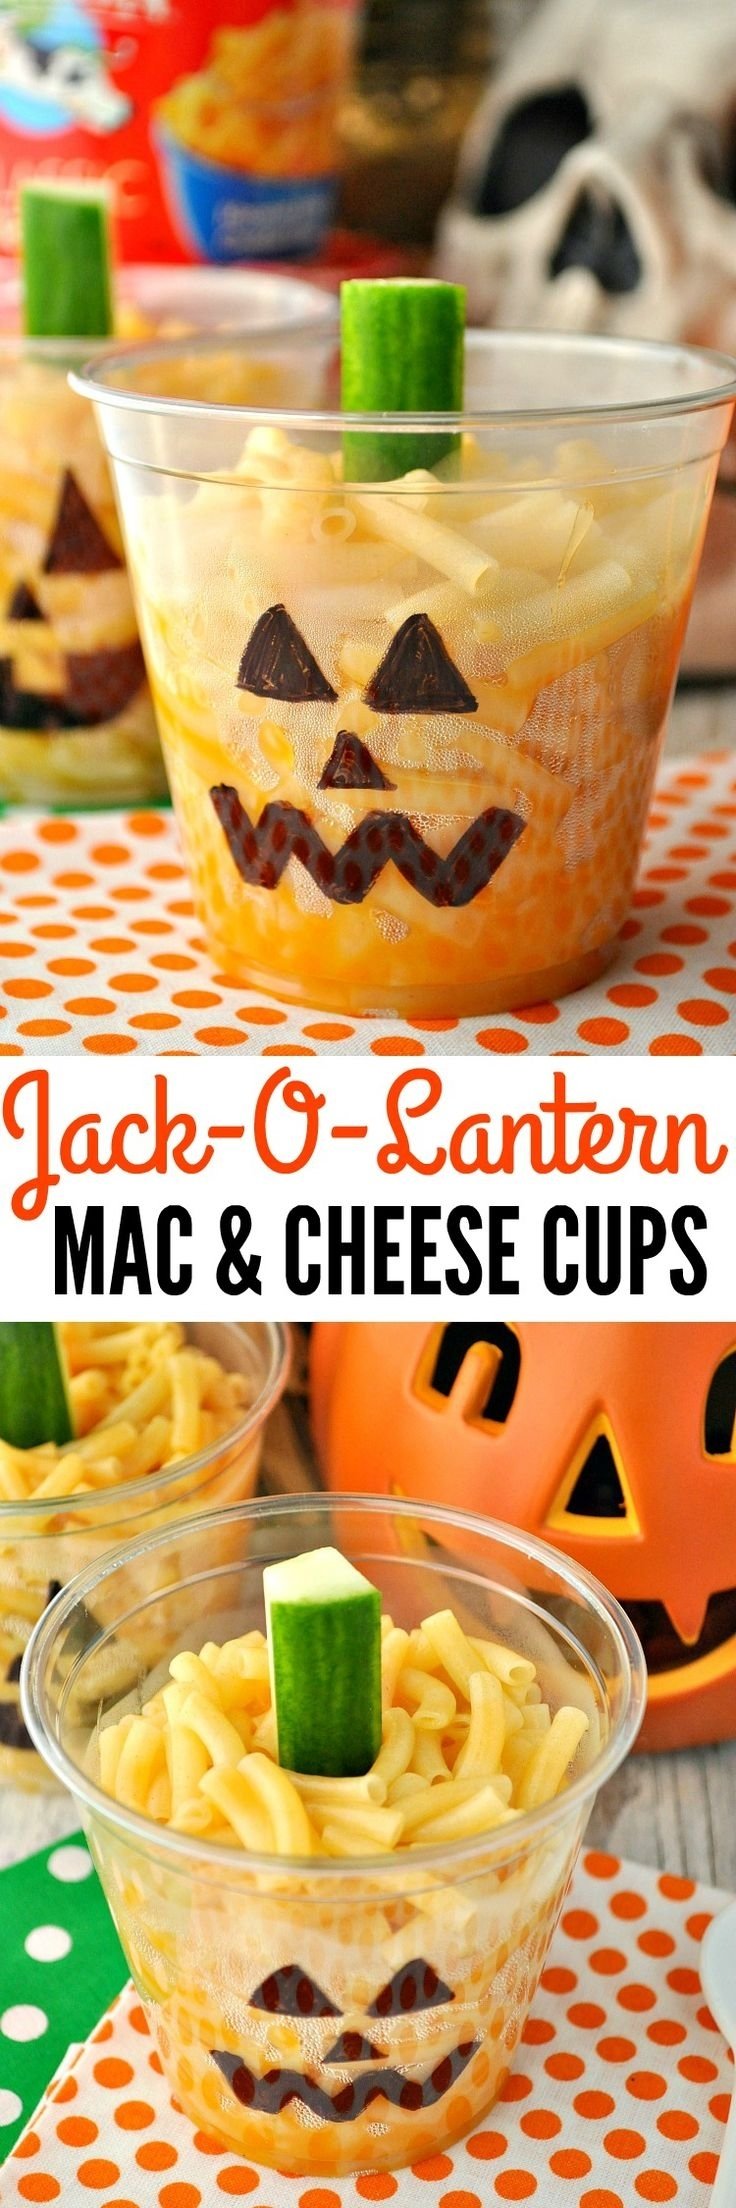 10 Lovable Halloween Food Ideas For Kids halloween themed dinner menu gidiye redformapolitica co 2022